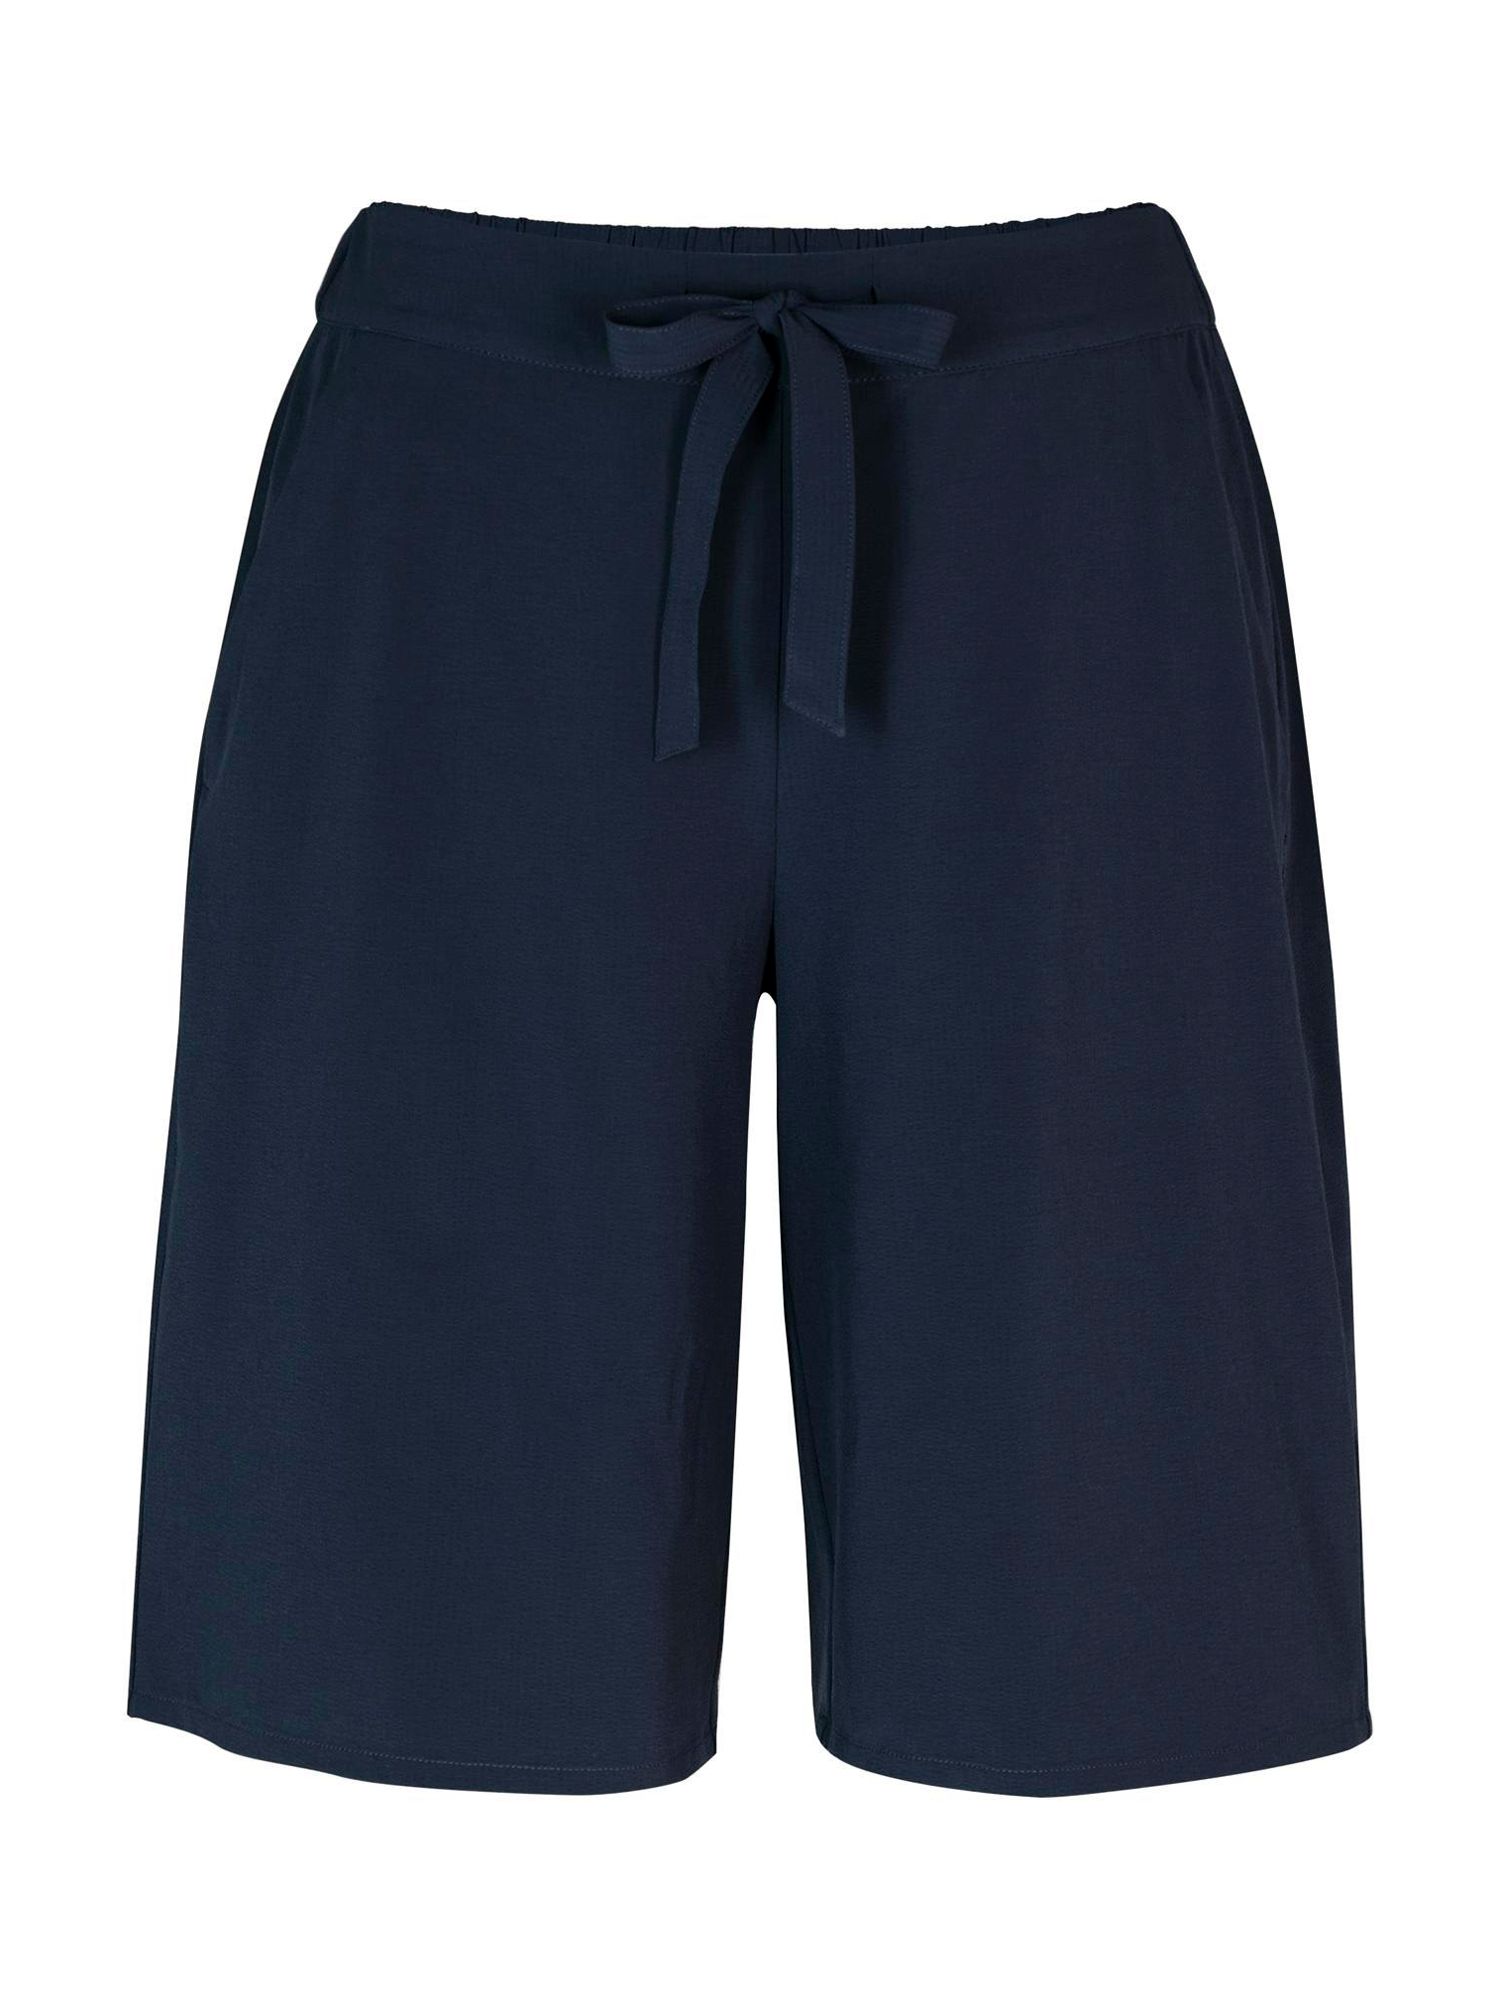 Rohan Azul Long Shorts, True Navy, 8R